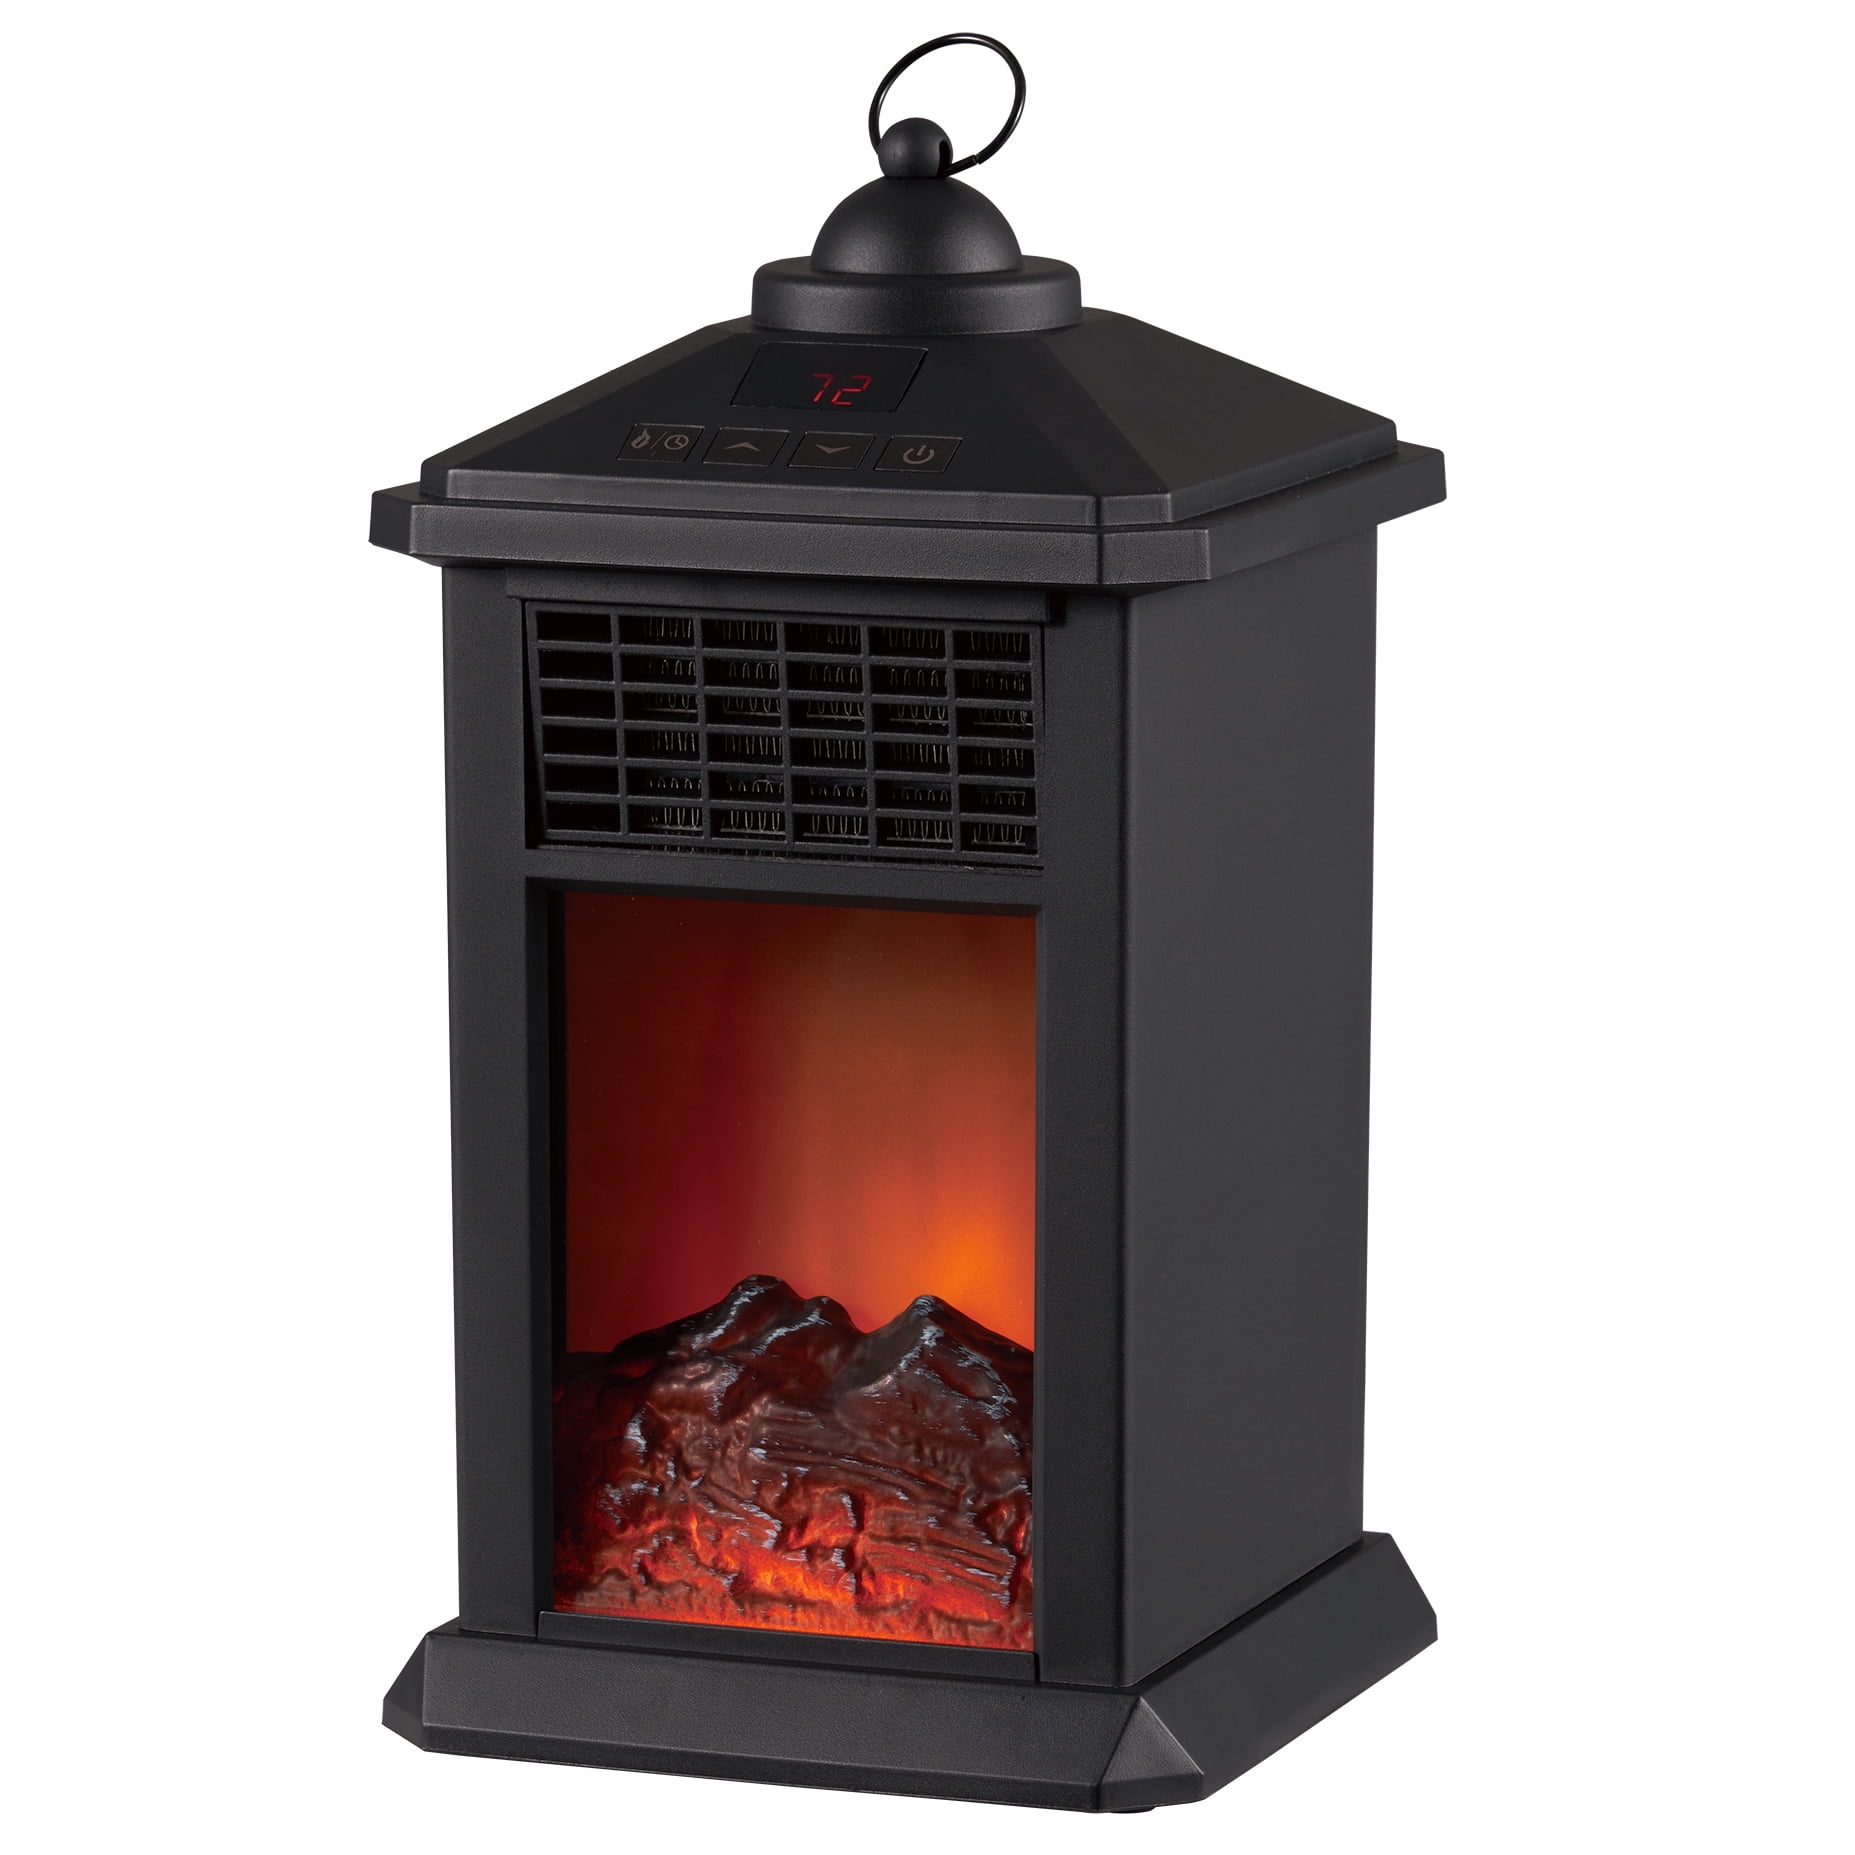 12.6" Wewarm Tall Electric Ceramic Desktop Fireplace Lantern (Black) $7.78 + Free Shipping w/ Walmart+ or on $35+